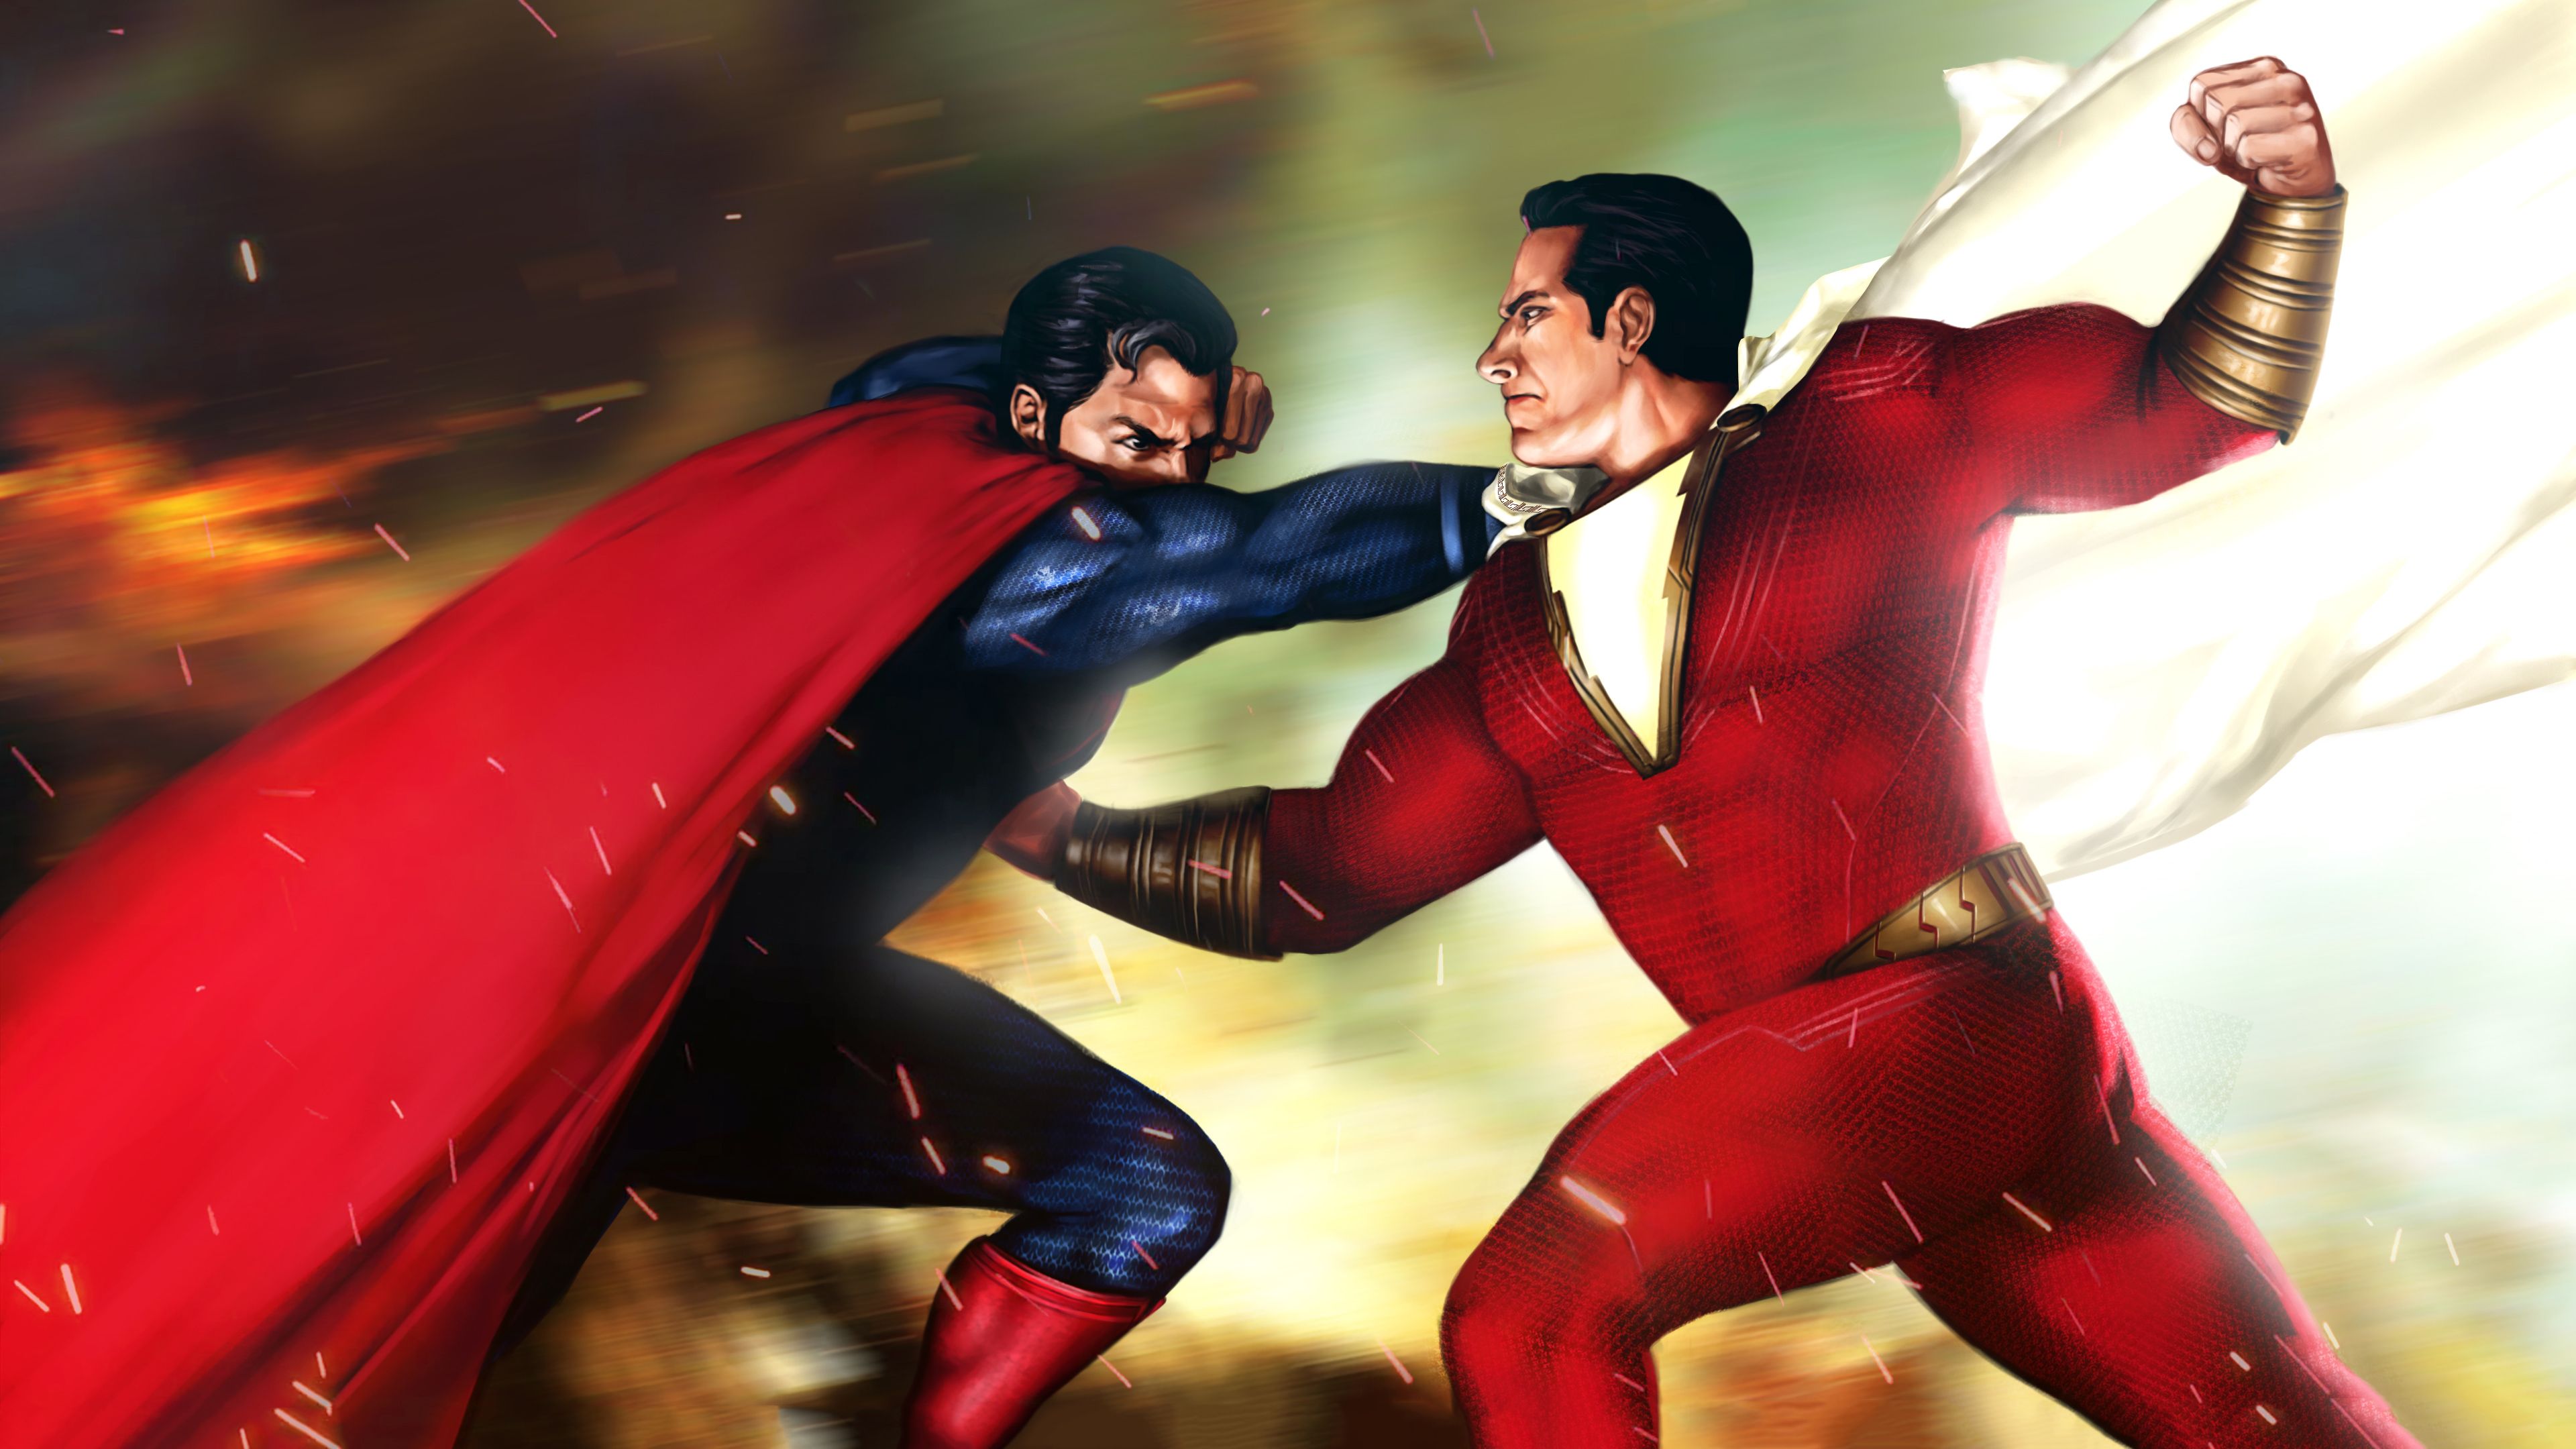 Superman Vs Shazam 4k, HD Superheroes, 4k Wallpaper, Image, Background, Photo and Picture